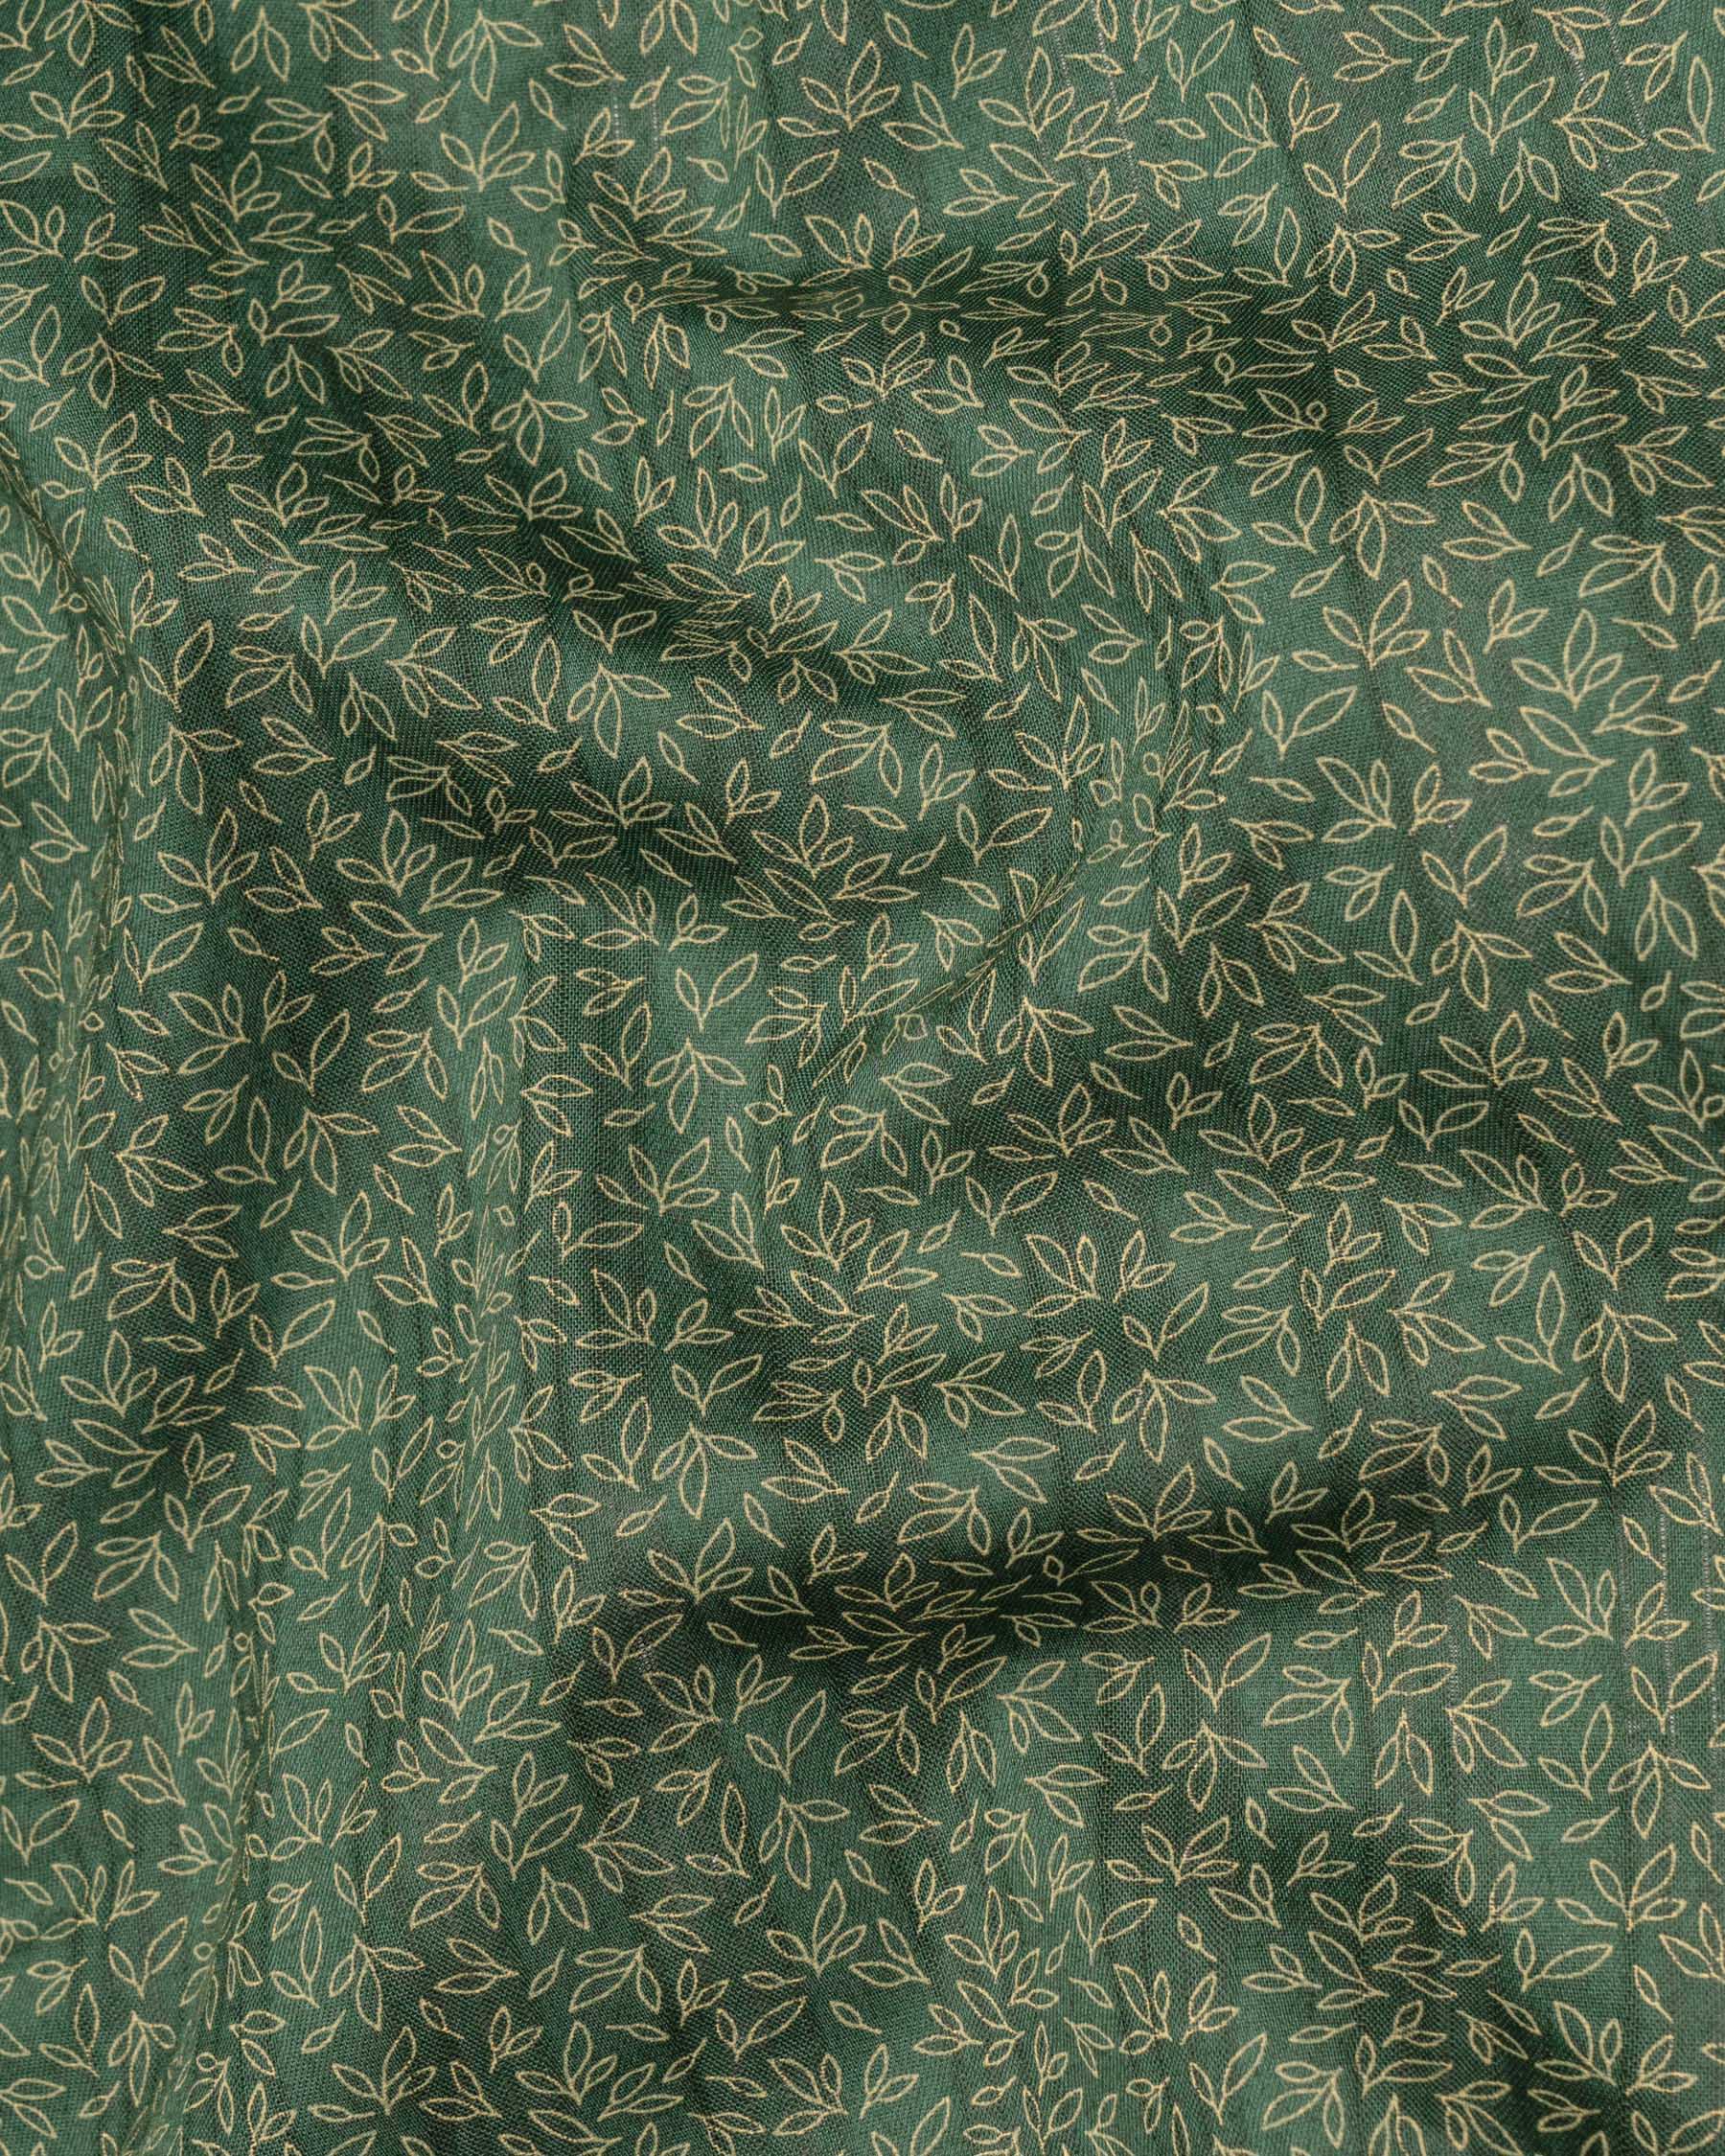 Mineral Green leaves Printed Dobby Textured Premium Cotton Shirt 6137-38, 6137-H-38, 6137-39, 6137-H-39, 6137-40, 6137-H-40, 6137-42, 6137-H-42, 6137-44, 6137-H-44, 6137-46, 6137-H-46, 6137-48, 6137-H-48, 6137-50, 6137-H-50, 6137-52, 6137-H-52